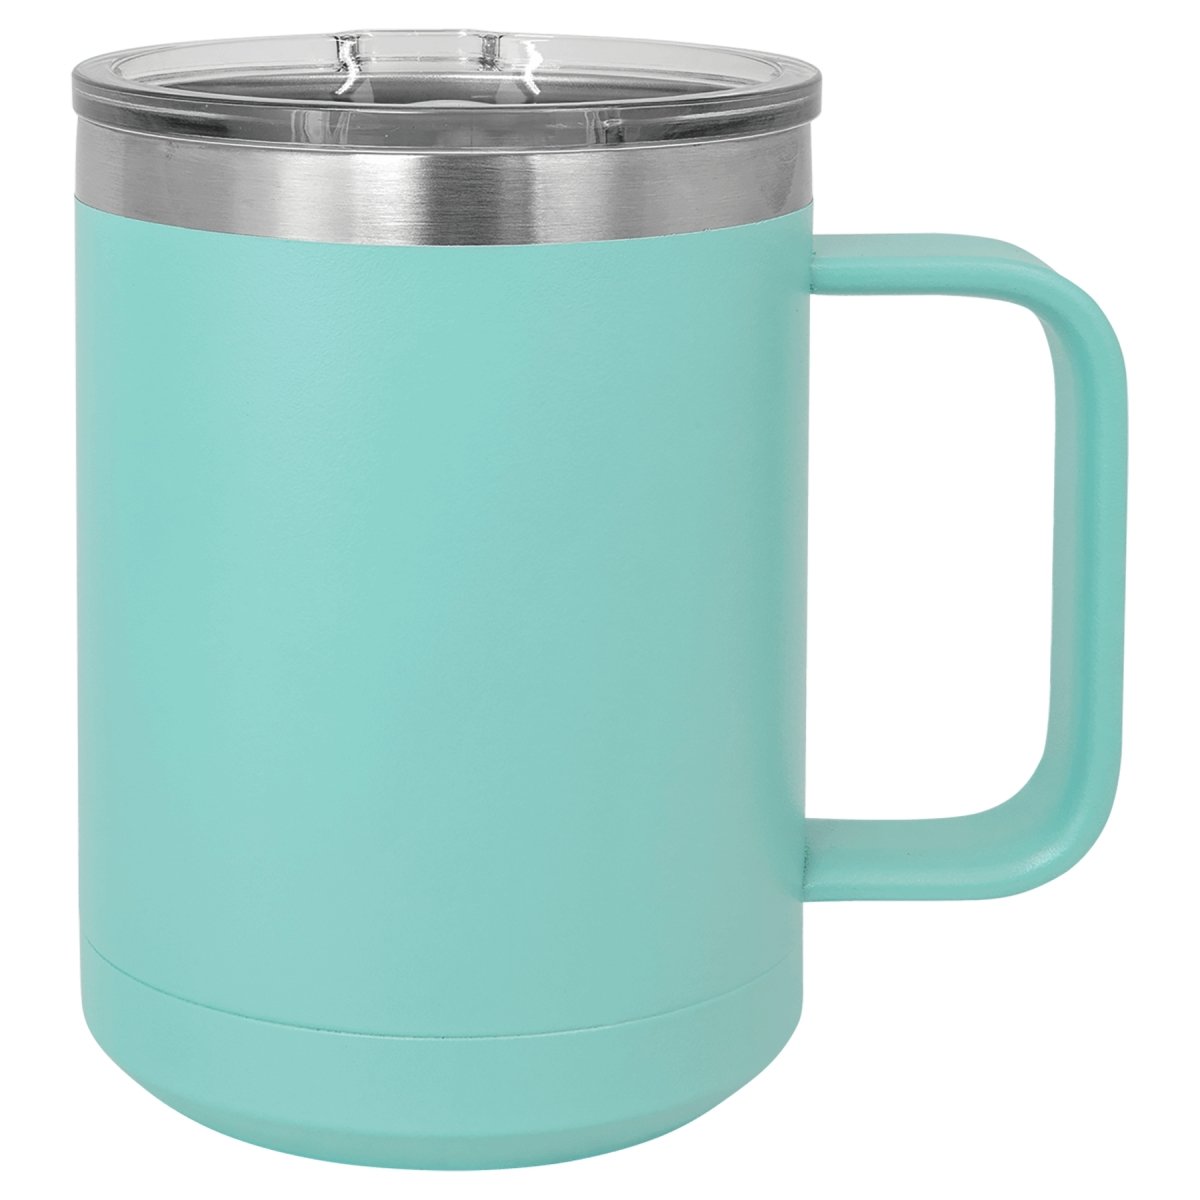 Insulated Coffee Mug with Sliding Lid | 16oz/460ml (Grande) - Powder Green